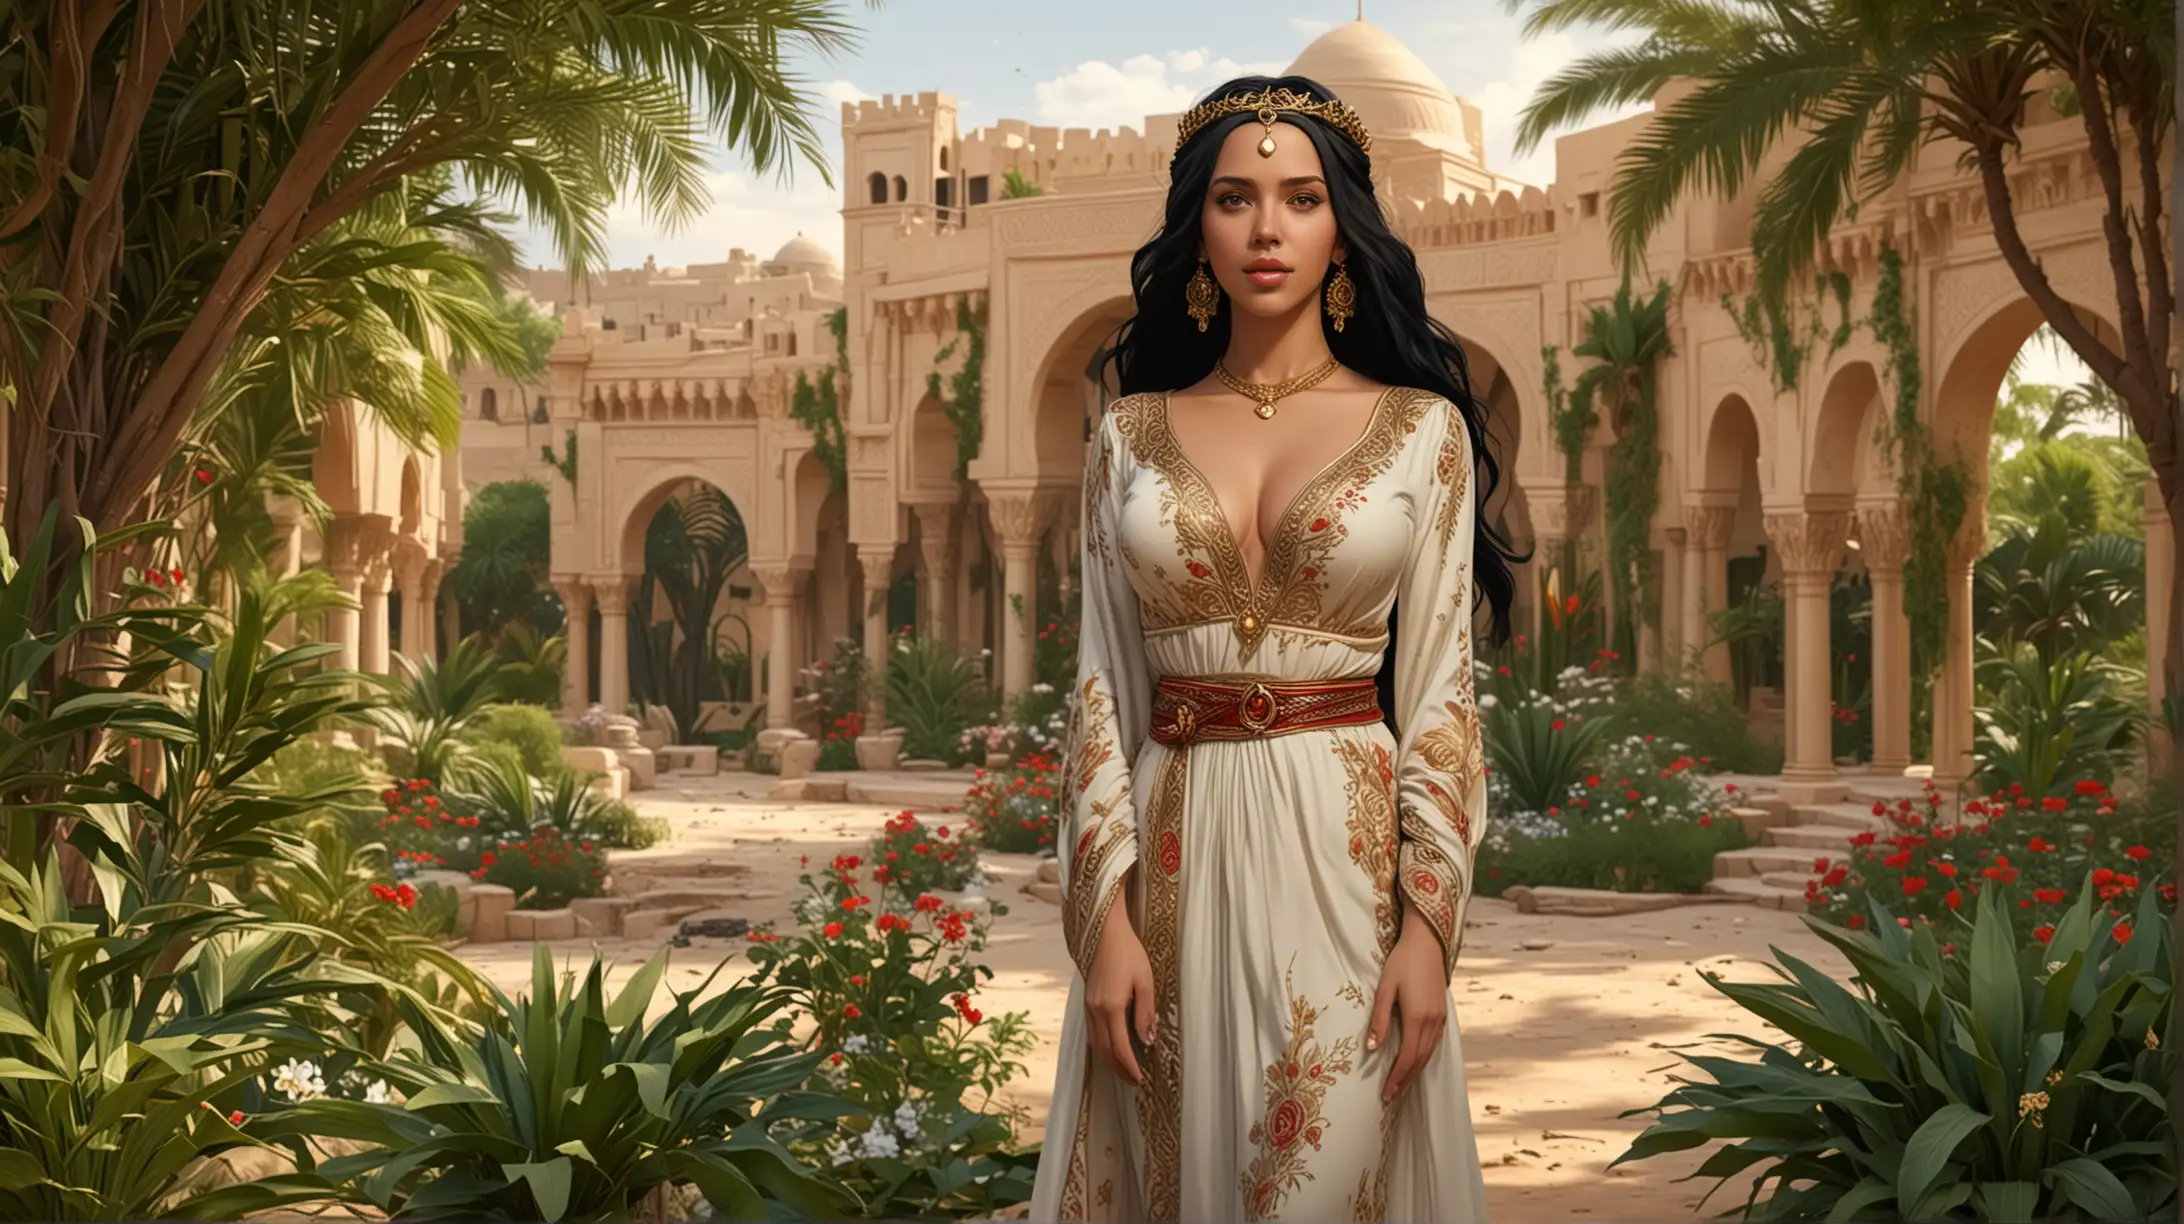 Radiant Arab Empress Scarlett Johansson amidst Lush Oasis